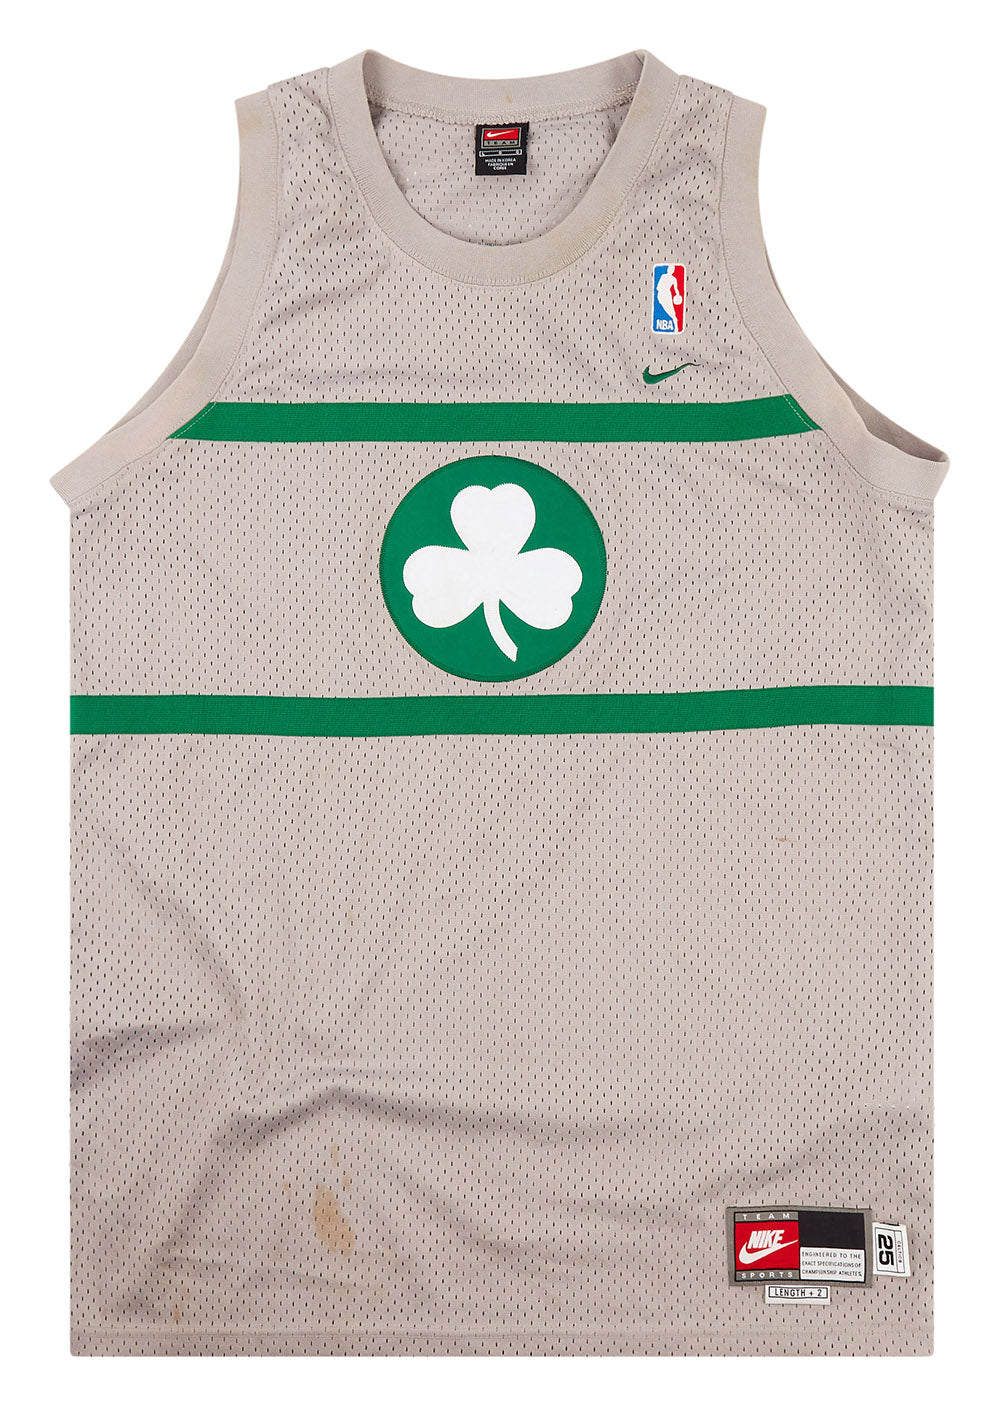 Boston Celtics release new grey jerseys from Nike as NBA rolls out